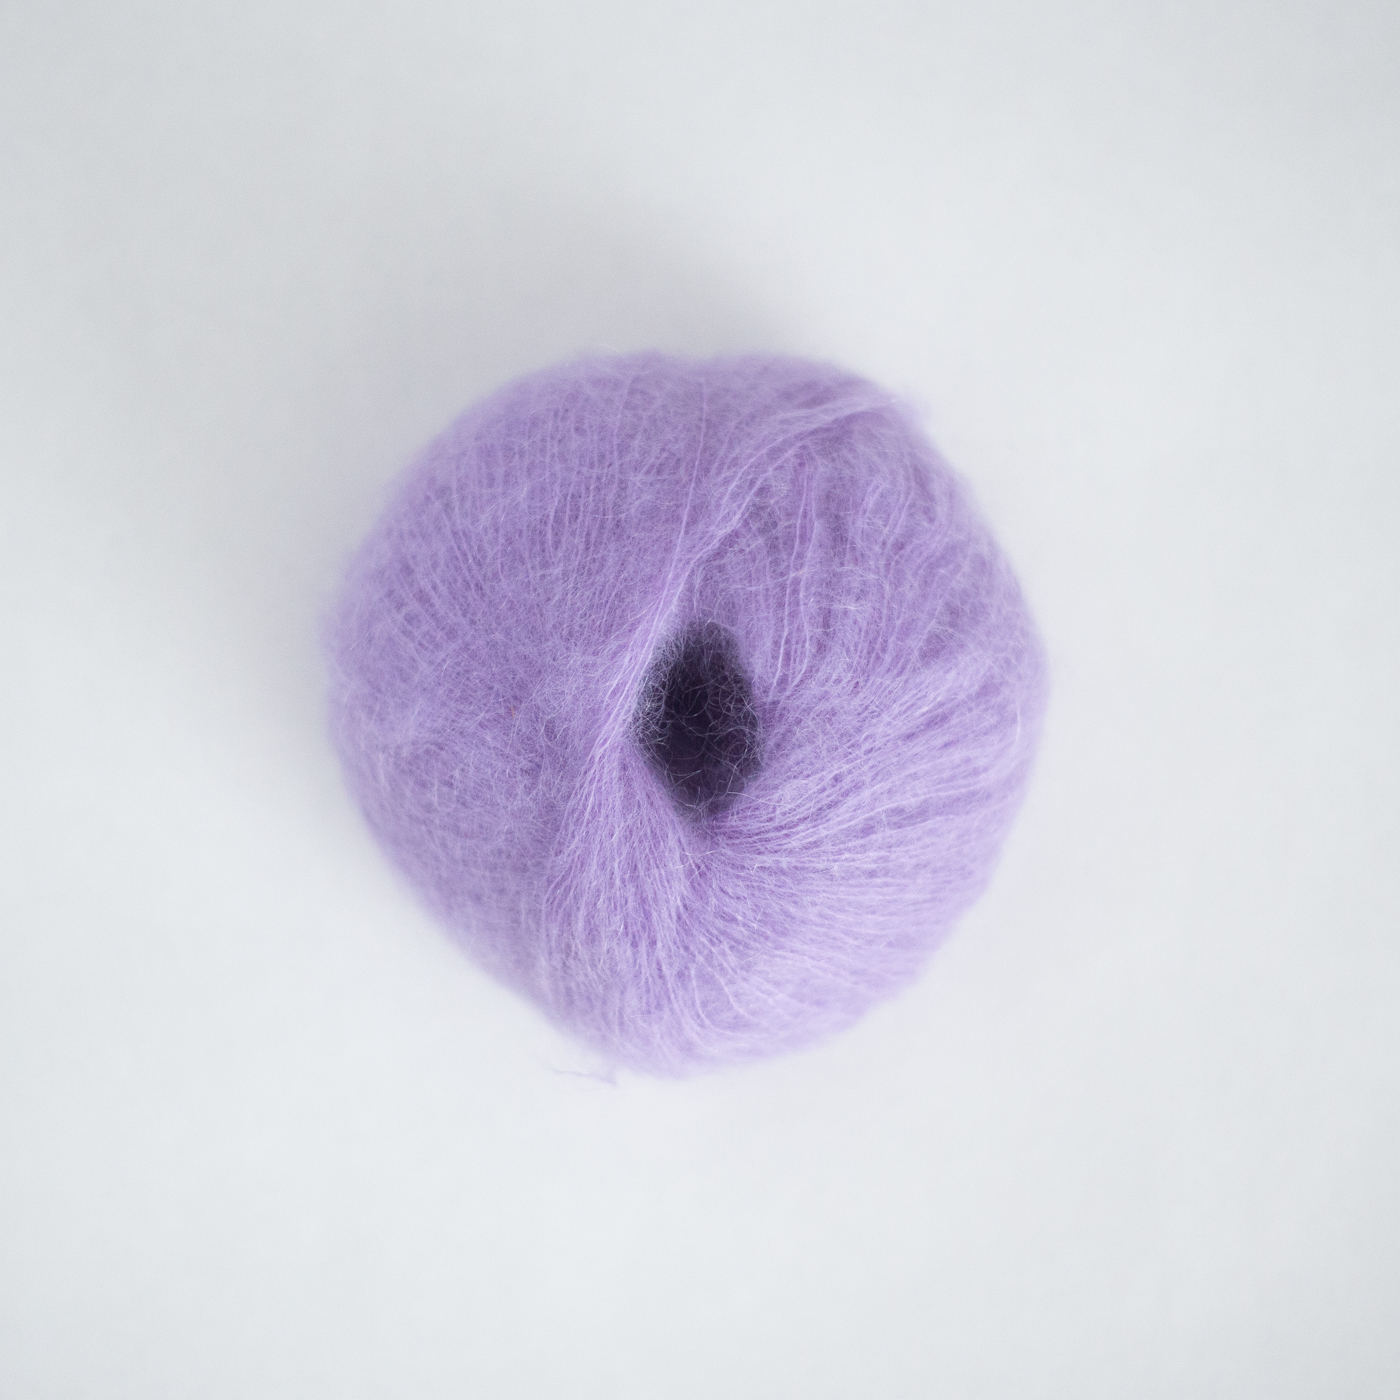 mohair yarn webshop - Perfect Purple Mohair | Hip Mohair Yarn - by HipKnitShop - 01/06/2018